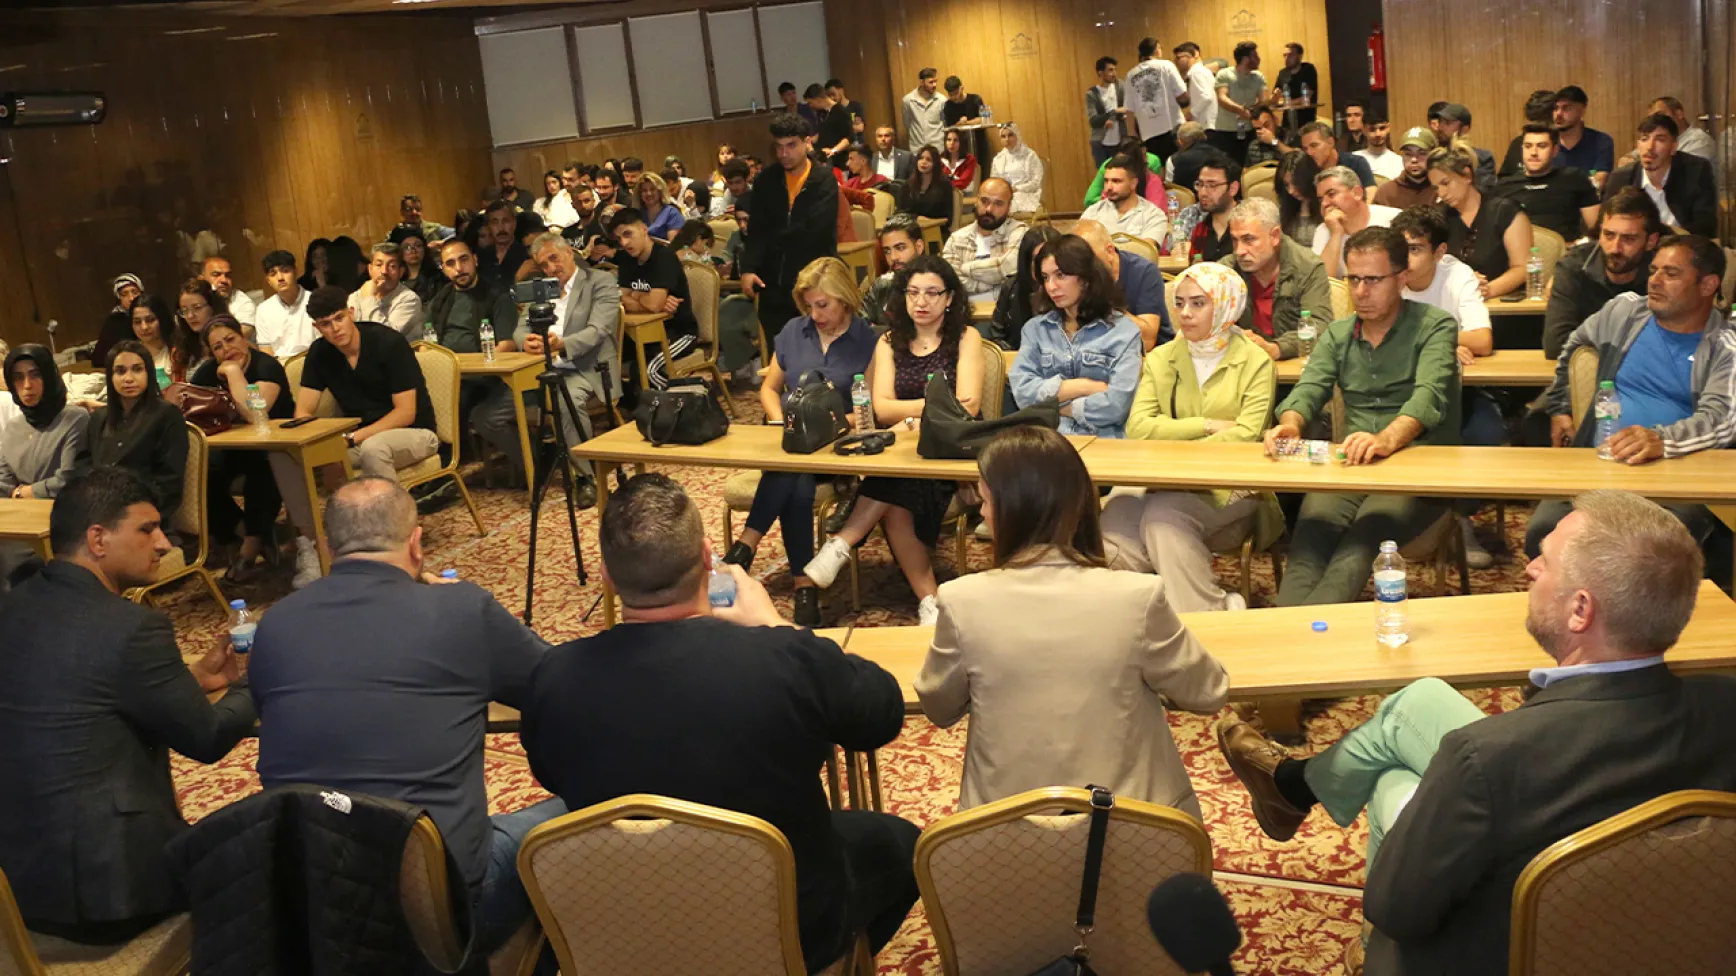 Elazığ'da 'Ausbildung' semineri düzenlendi